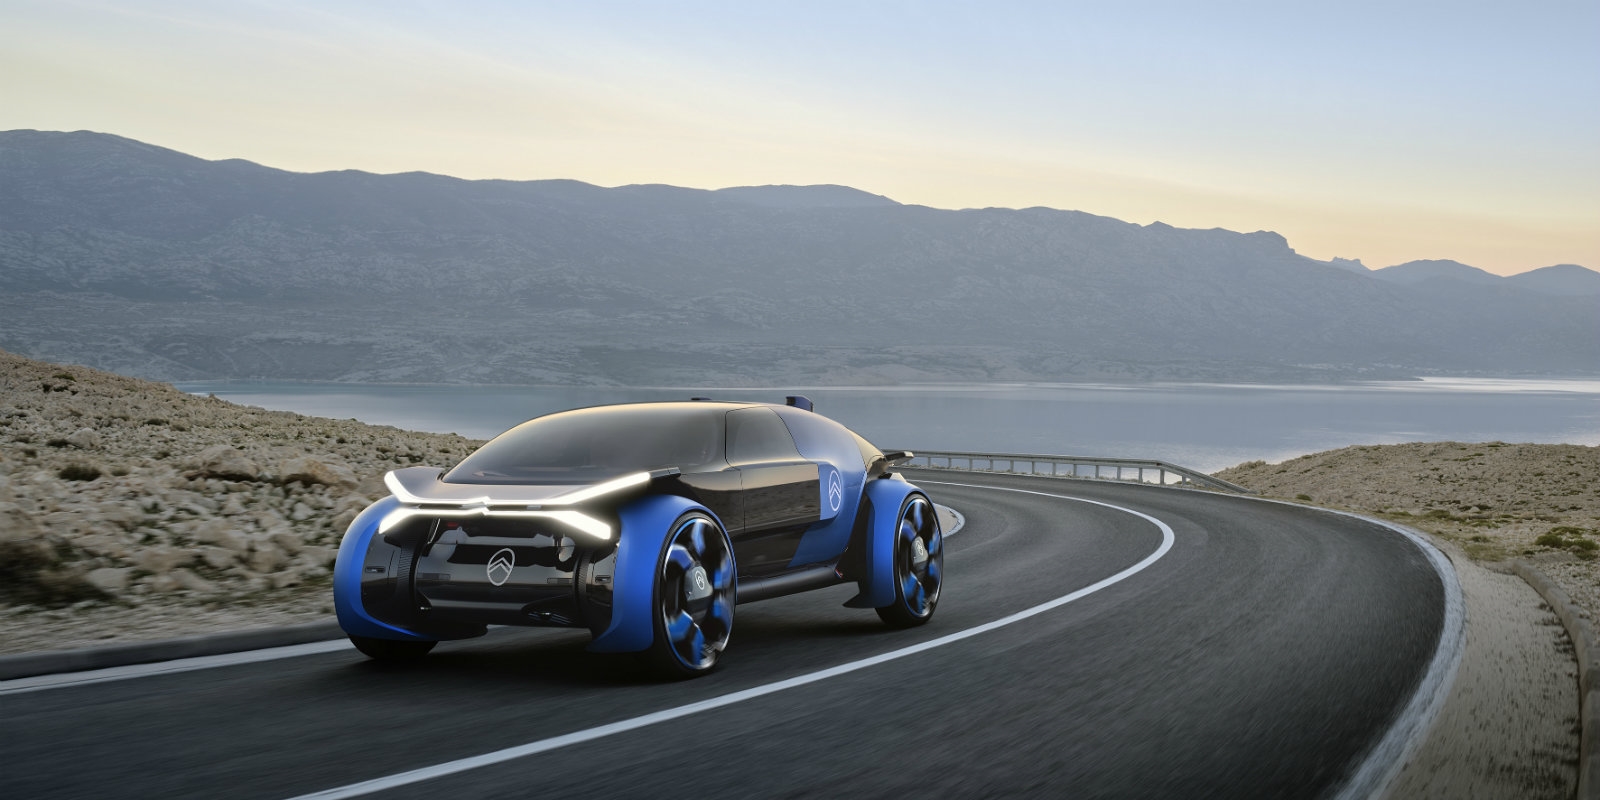 Citroen’s futuristic autonomous EV concept is designed for long trips | DeviceDaily.com